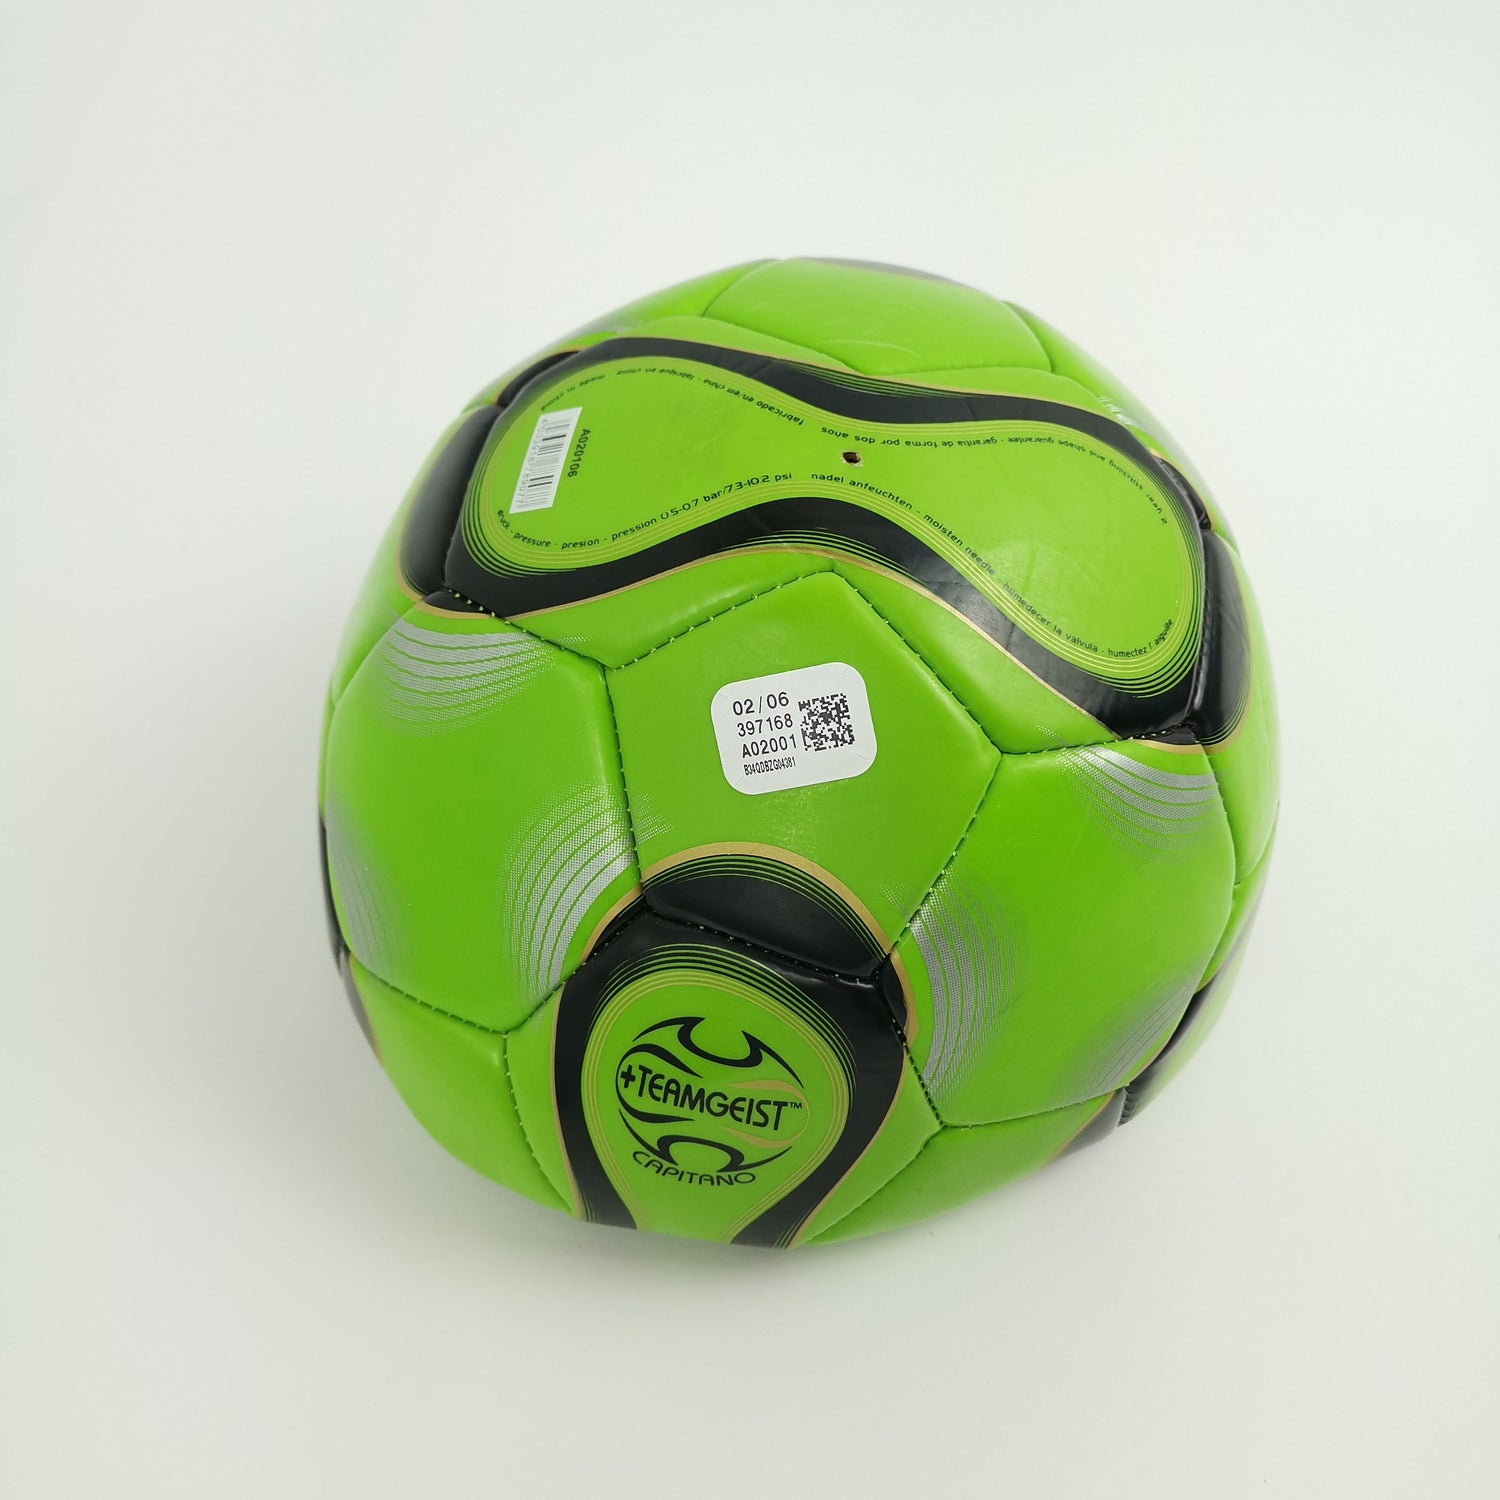 Fußball Adidas Teamgeist WM 2006 XBox-Edition Replica NEU NEW